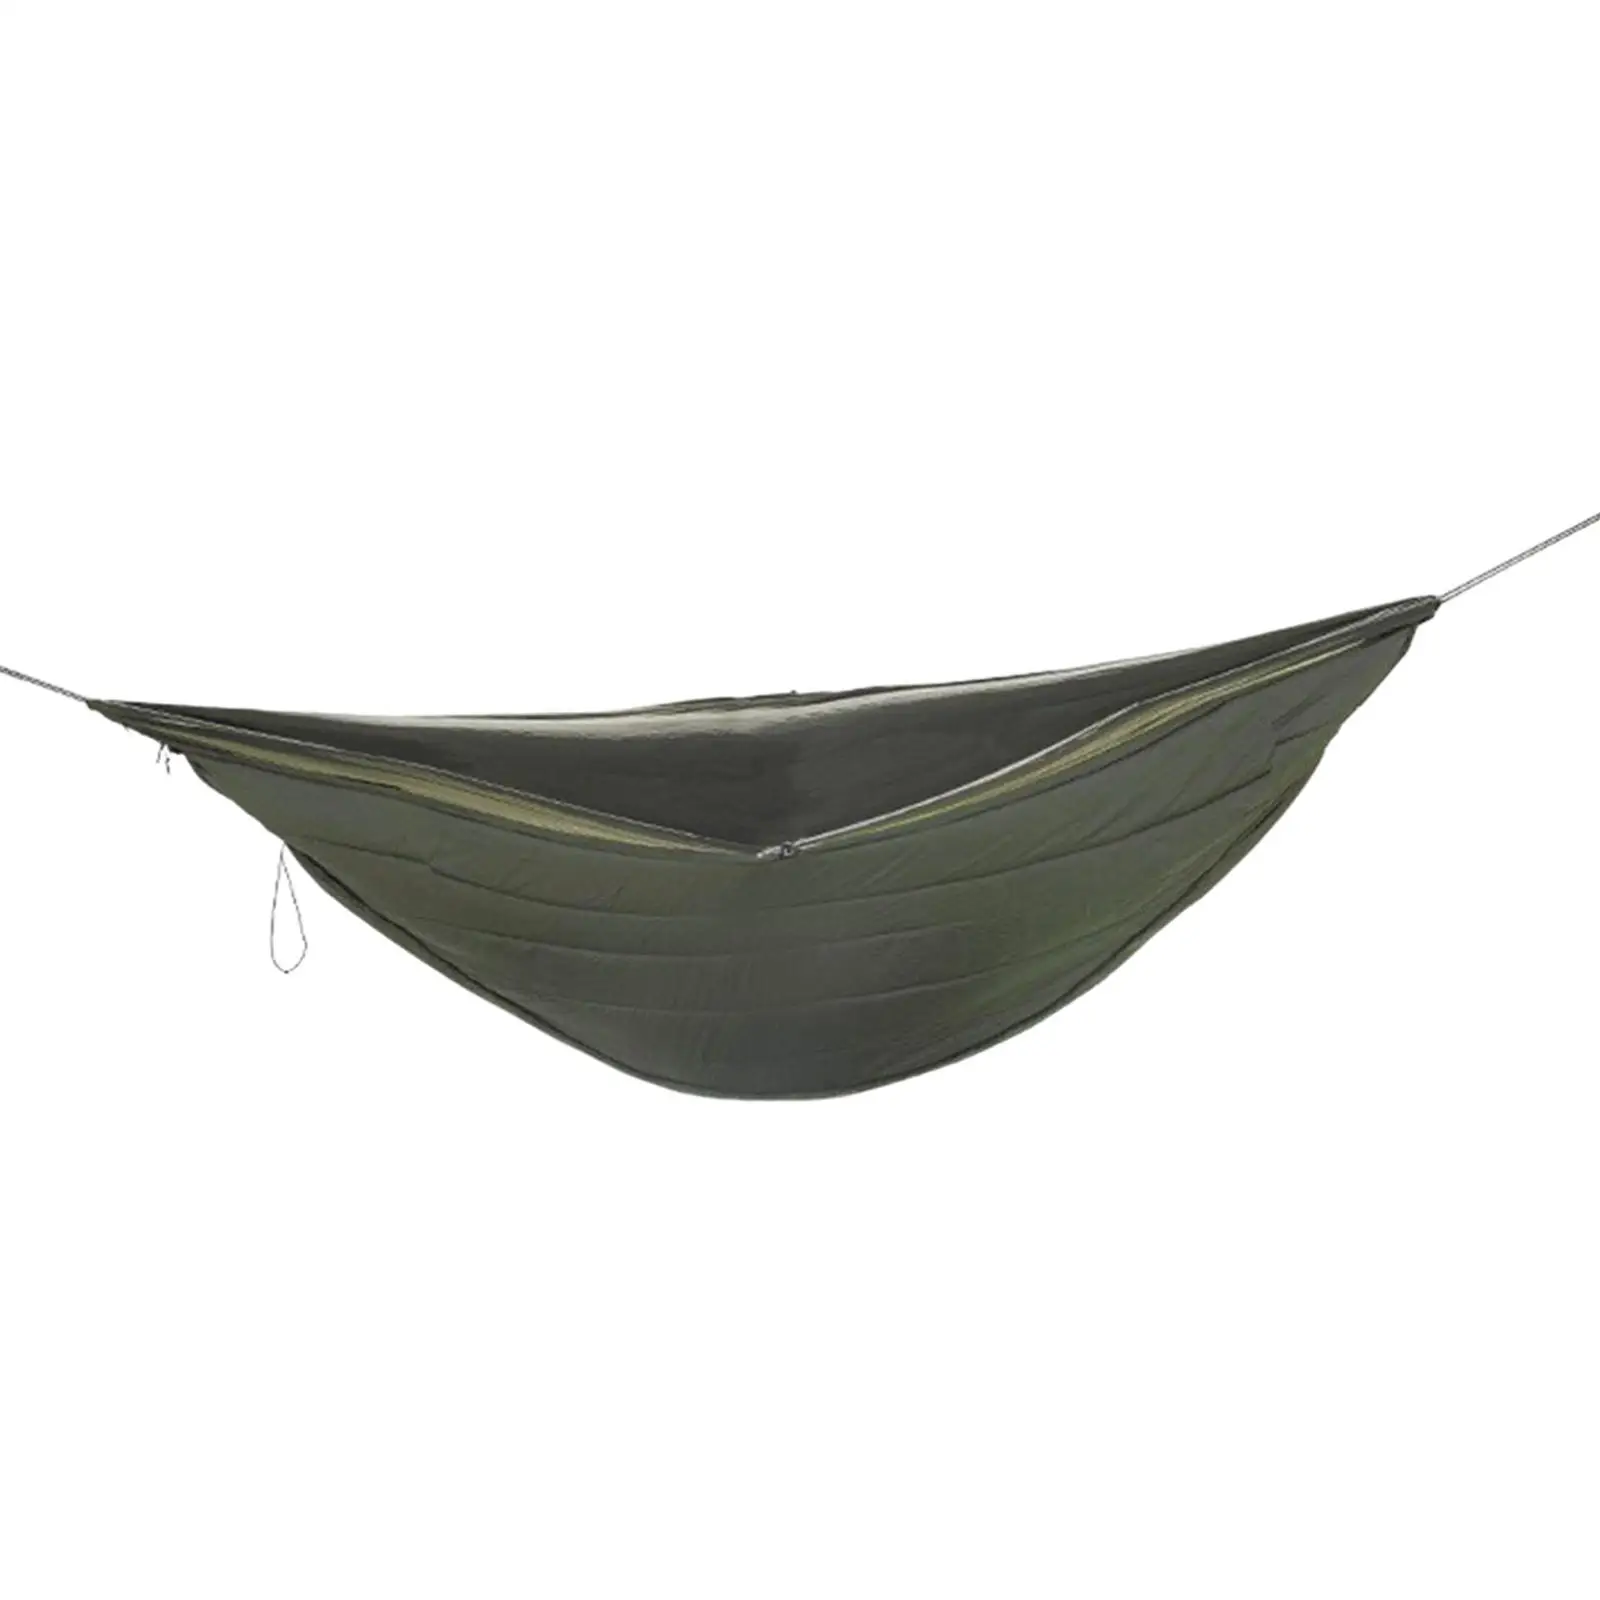 Hammock Underquilt Large Under Blanket Camping Sleeping Bag for Travel